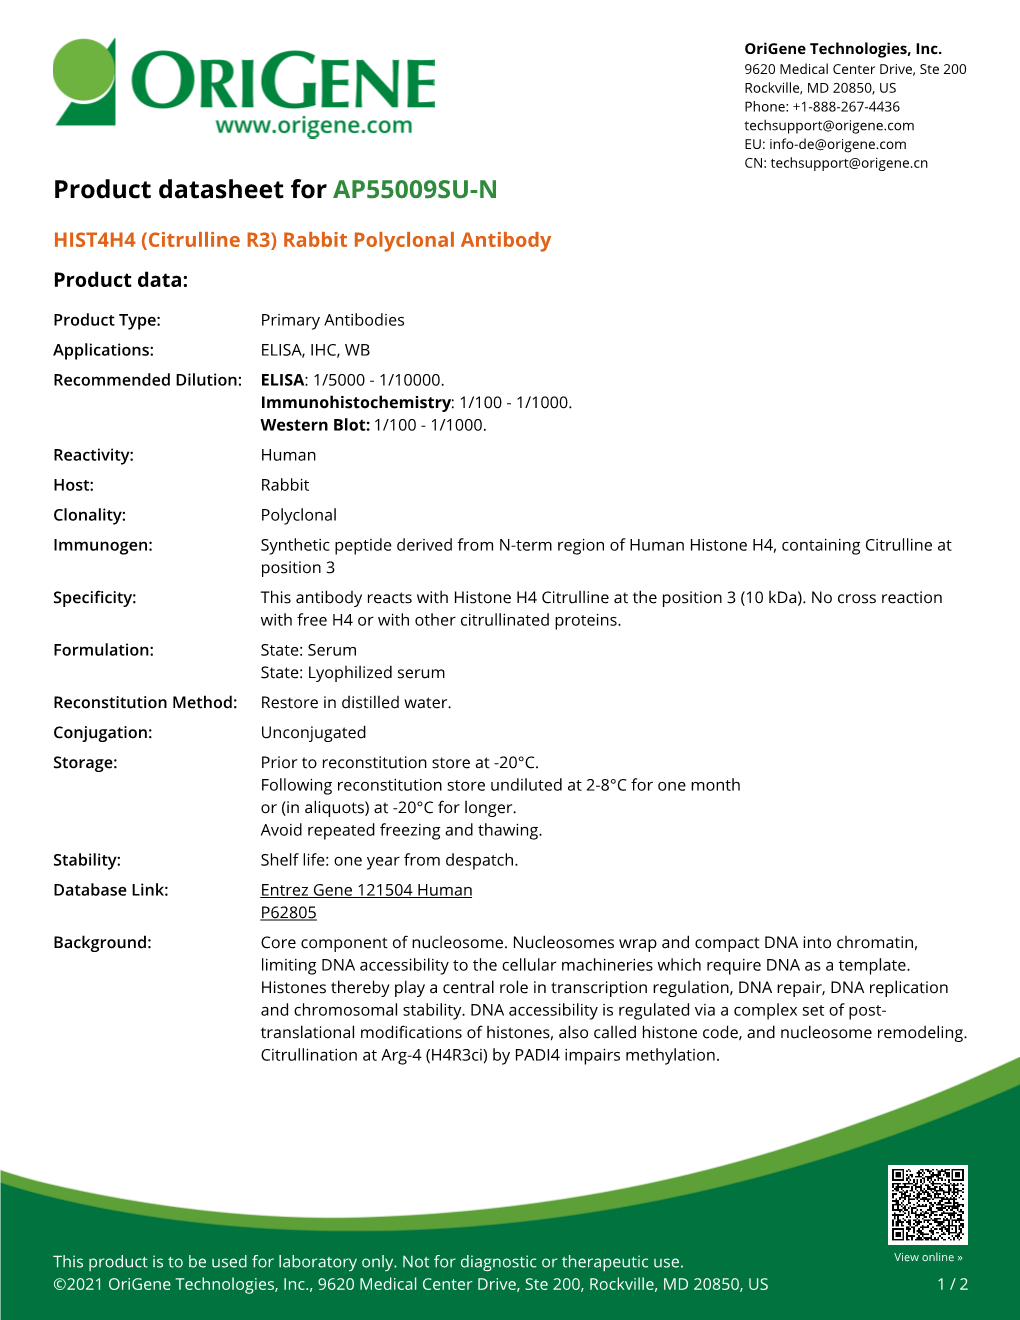 HIST4H4 (Citrulline R3) Rabbit Polyclonal Antibody Product Data